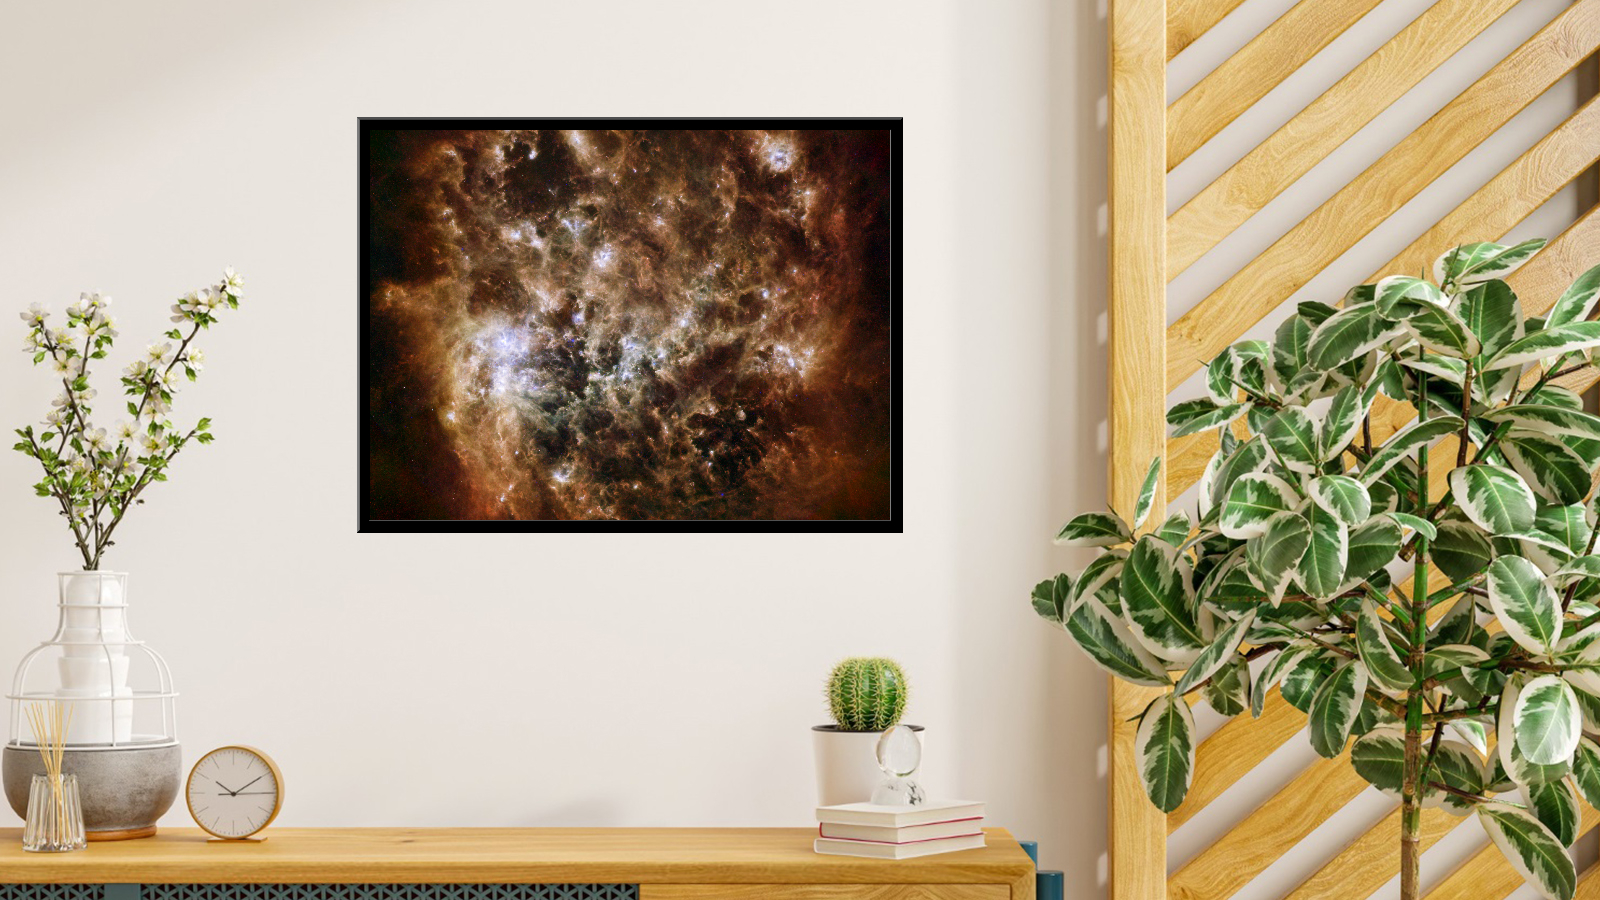 Large Magellanic Cloud - 2